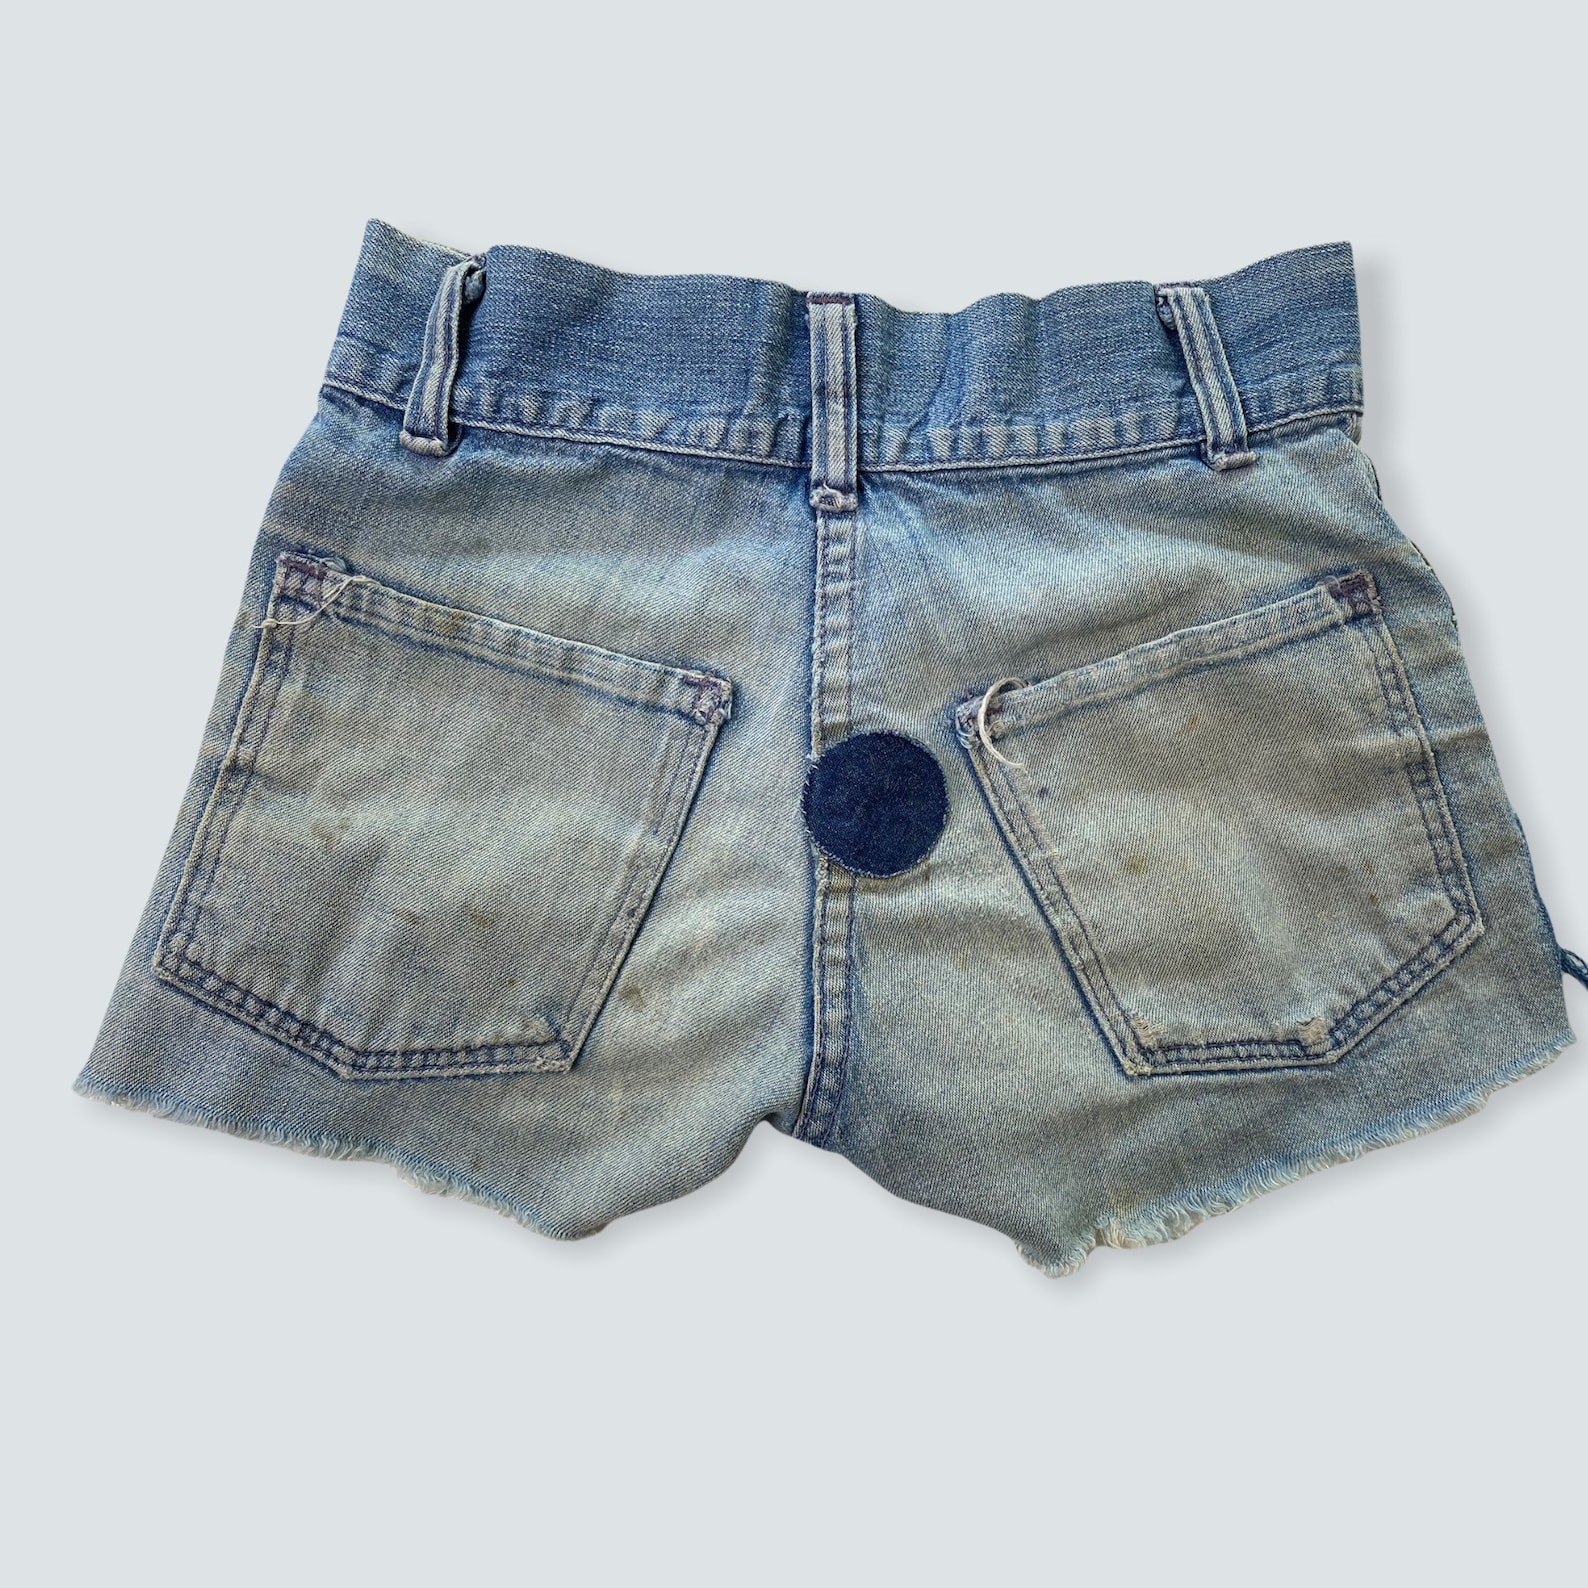 Vintage Denim Cutoffs Jeans Distressed Shorts 1960s 1970s - Etsy